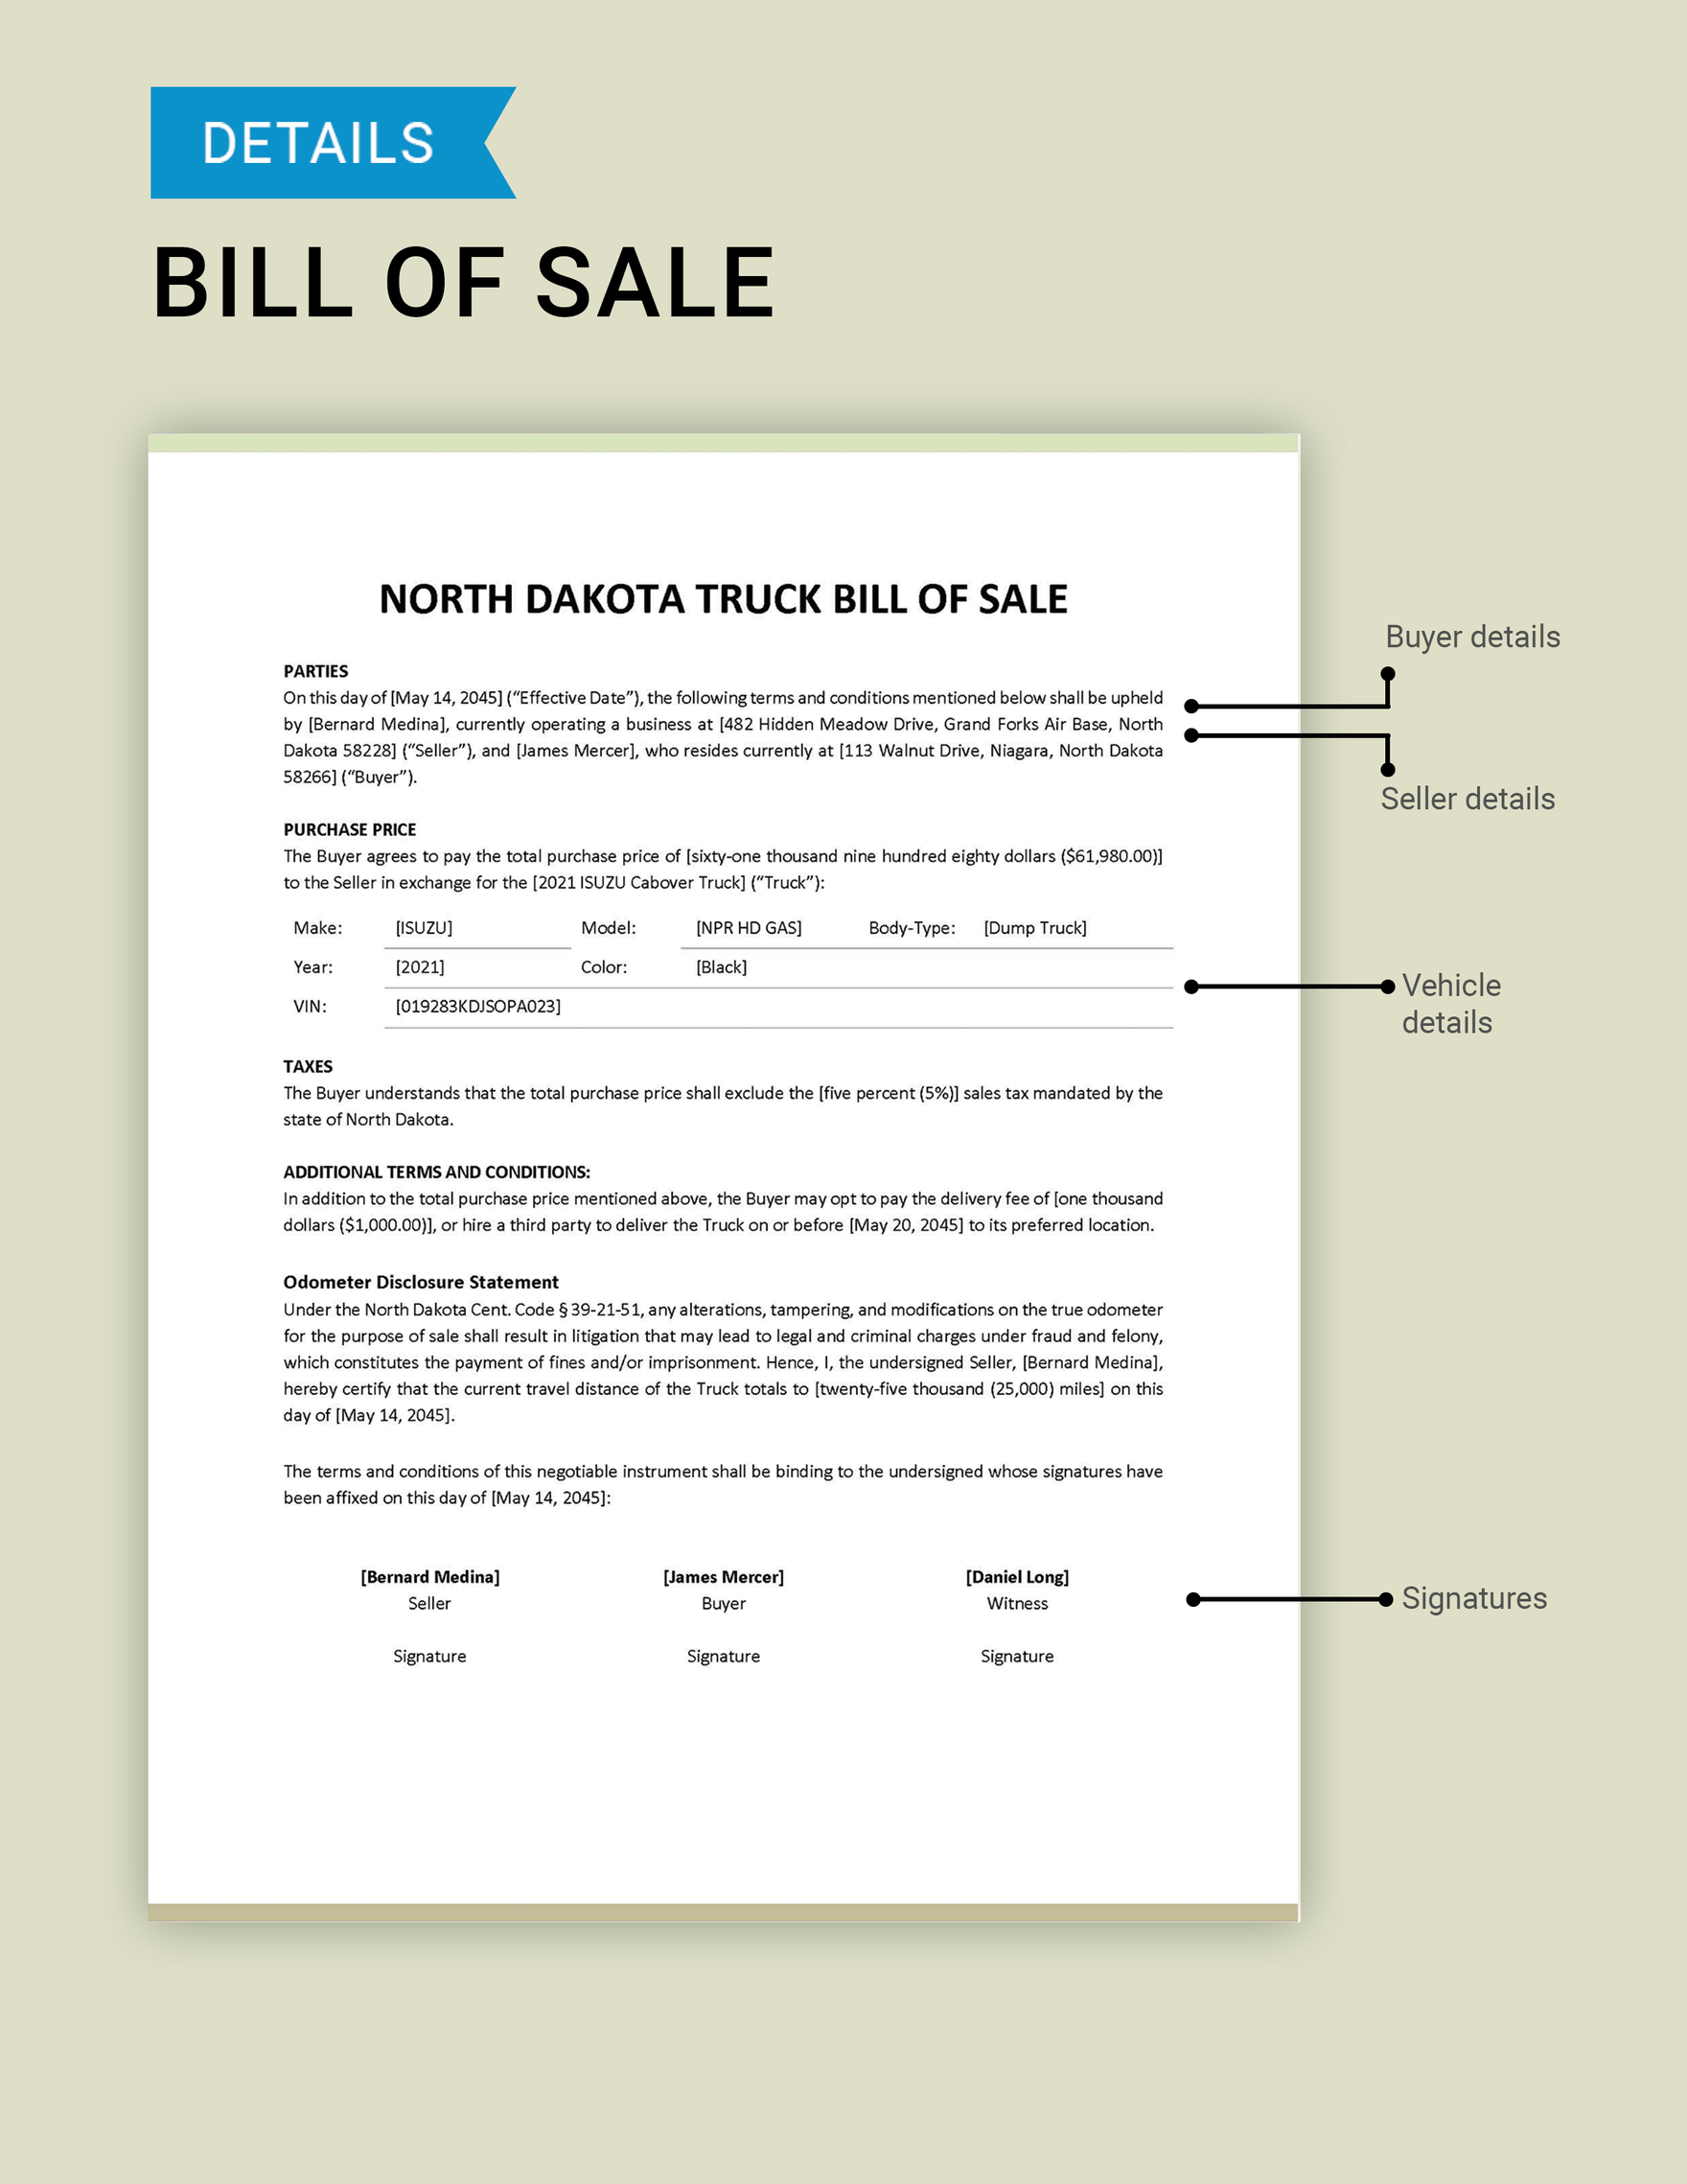 North Dakota Truck Bill of Sale Template